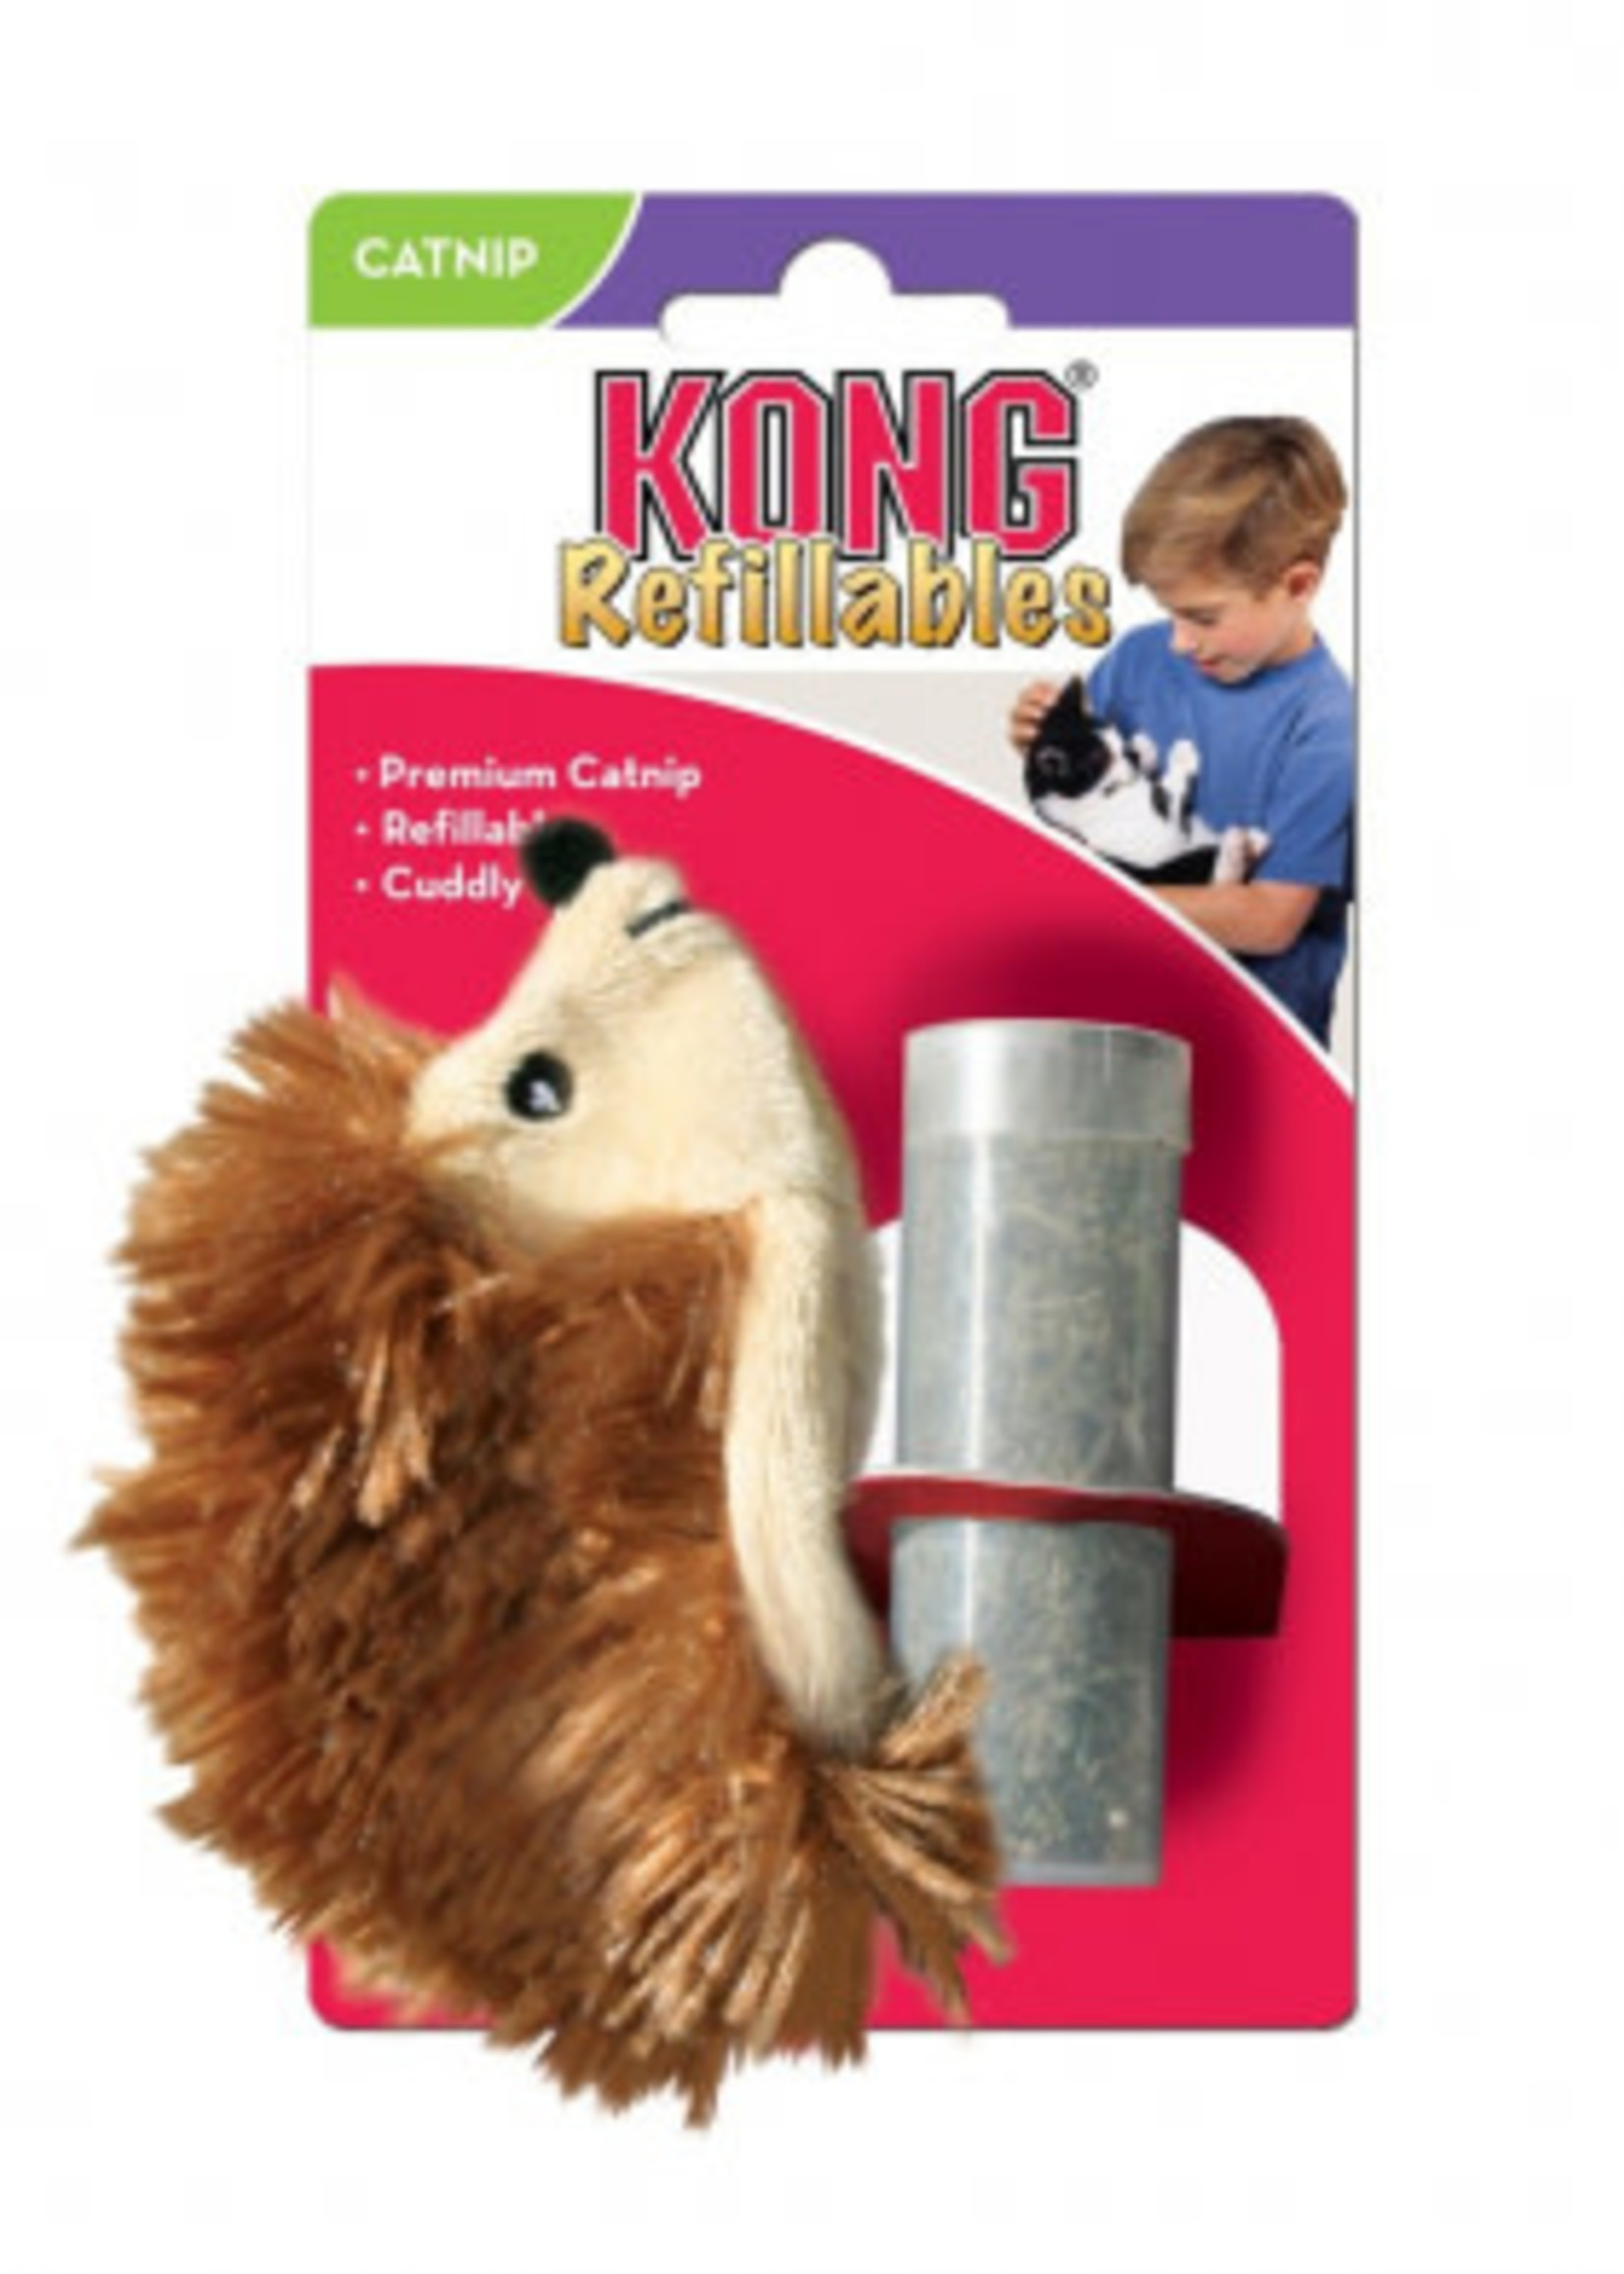 Kong® Kong ® Refillables Hedgehog